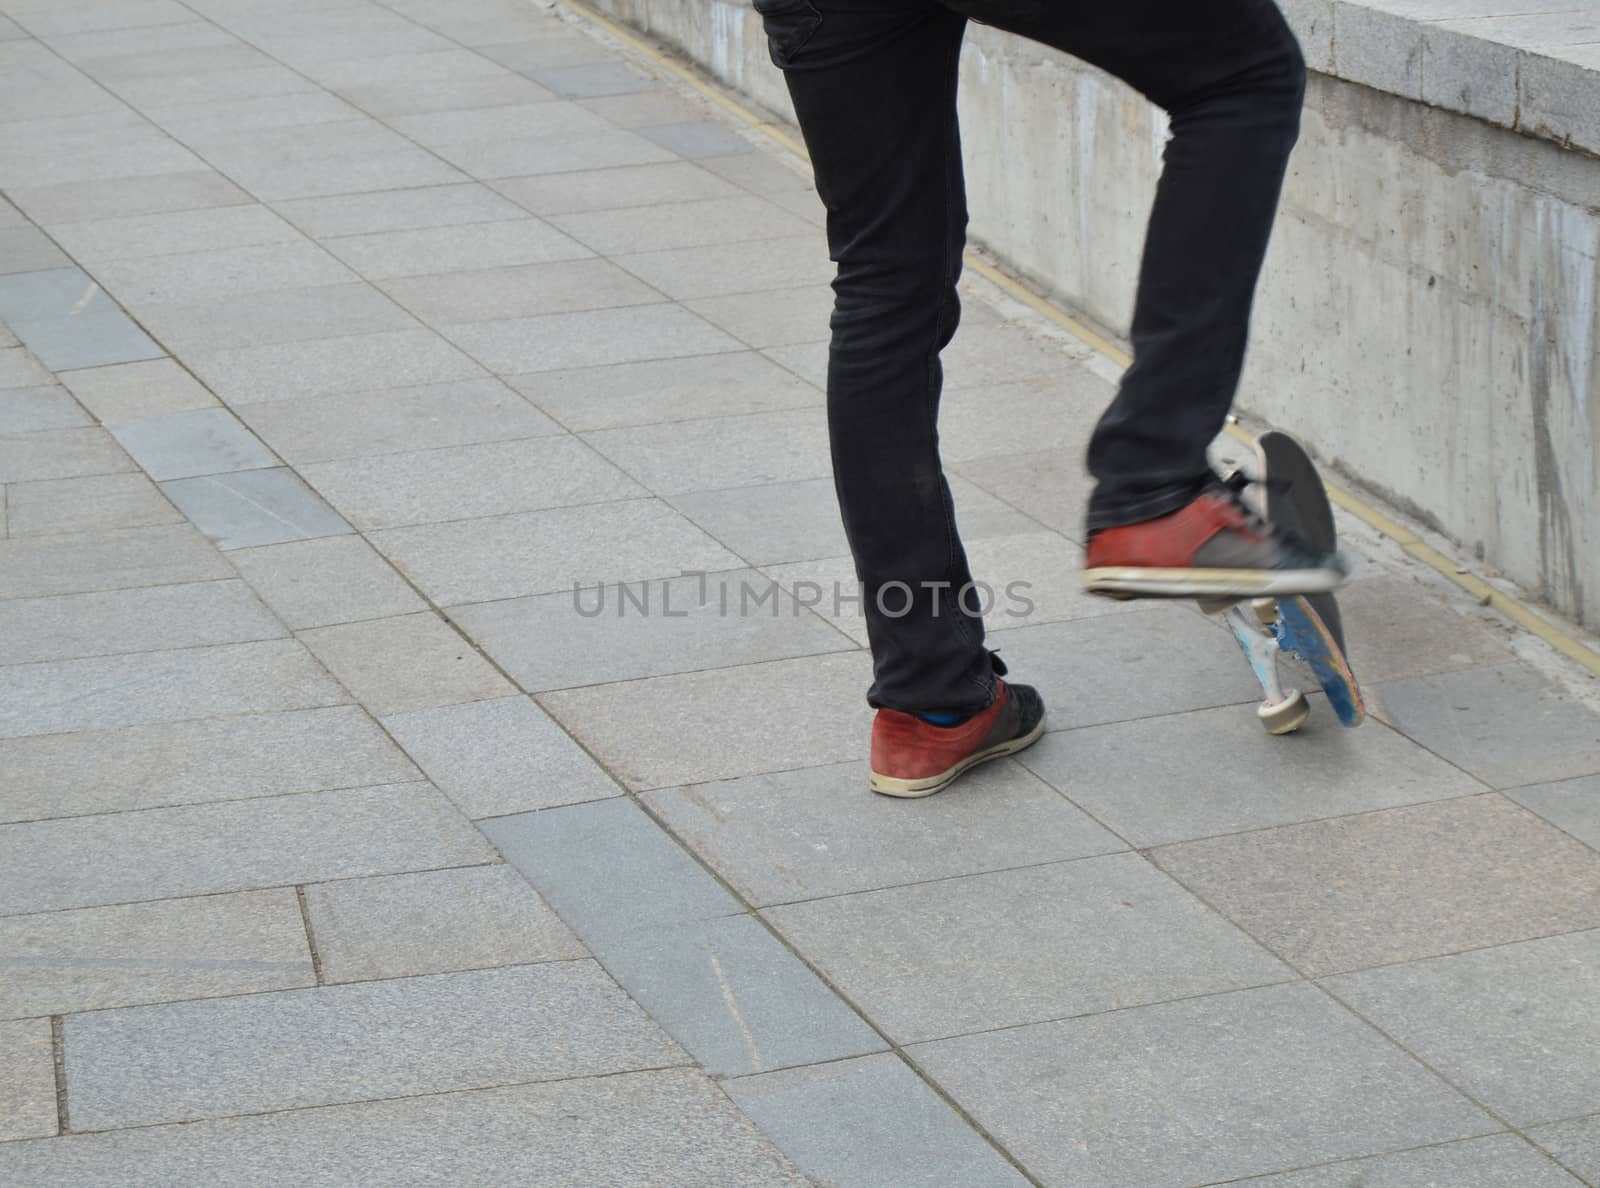 skateboard, a man riding and making stunts.